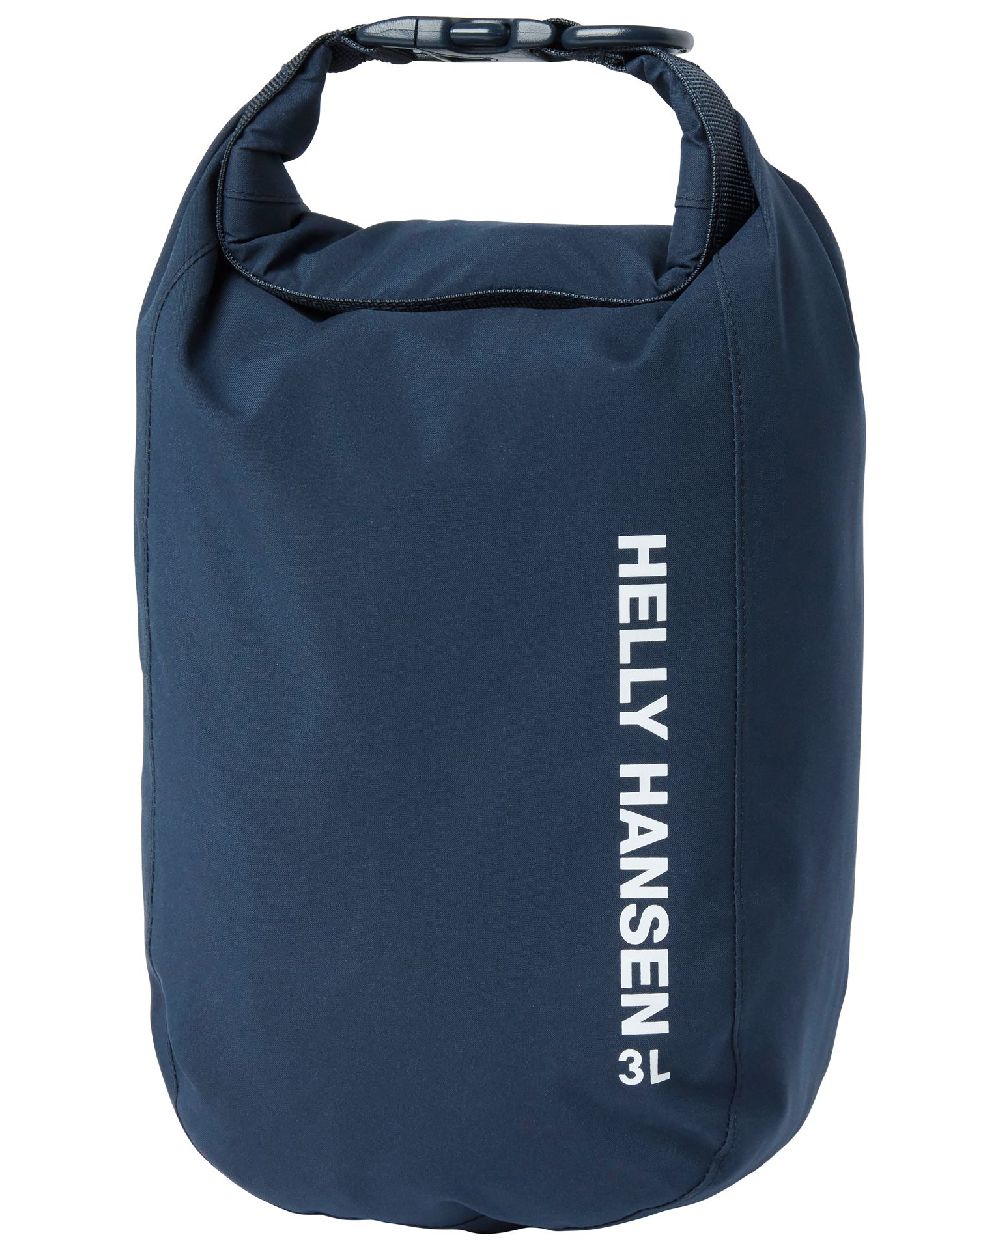 Navy Helly Hansen American Magic Dry Bag 3L on white background 